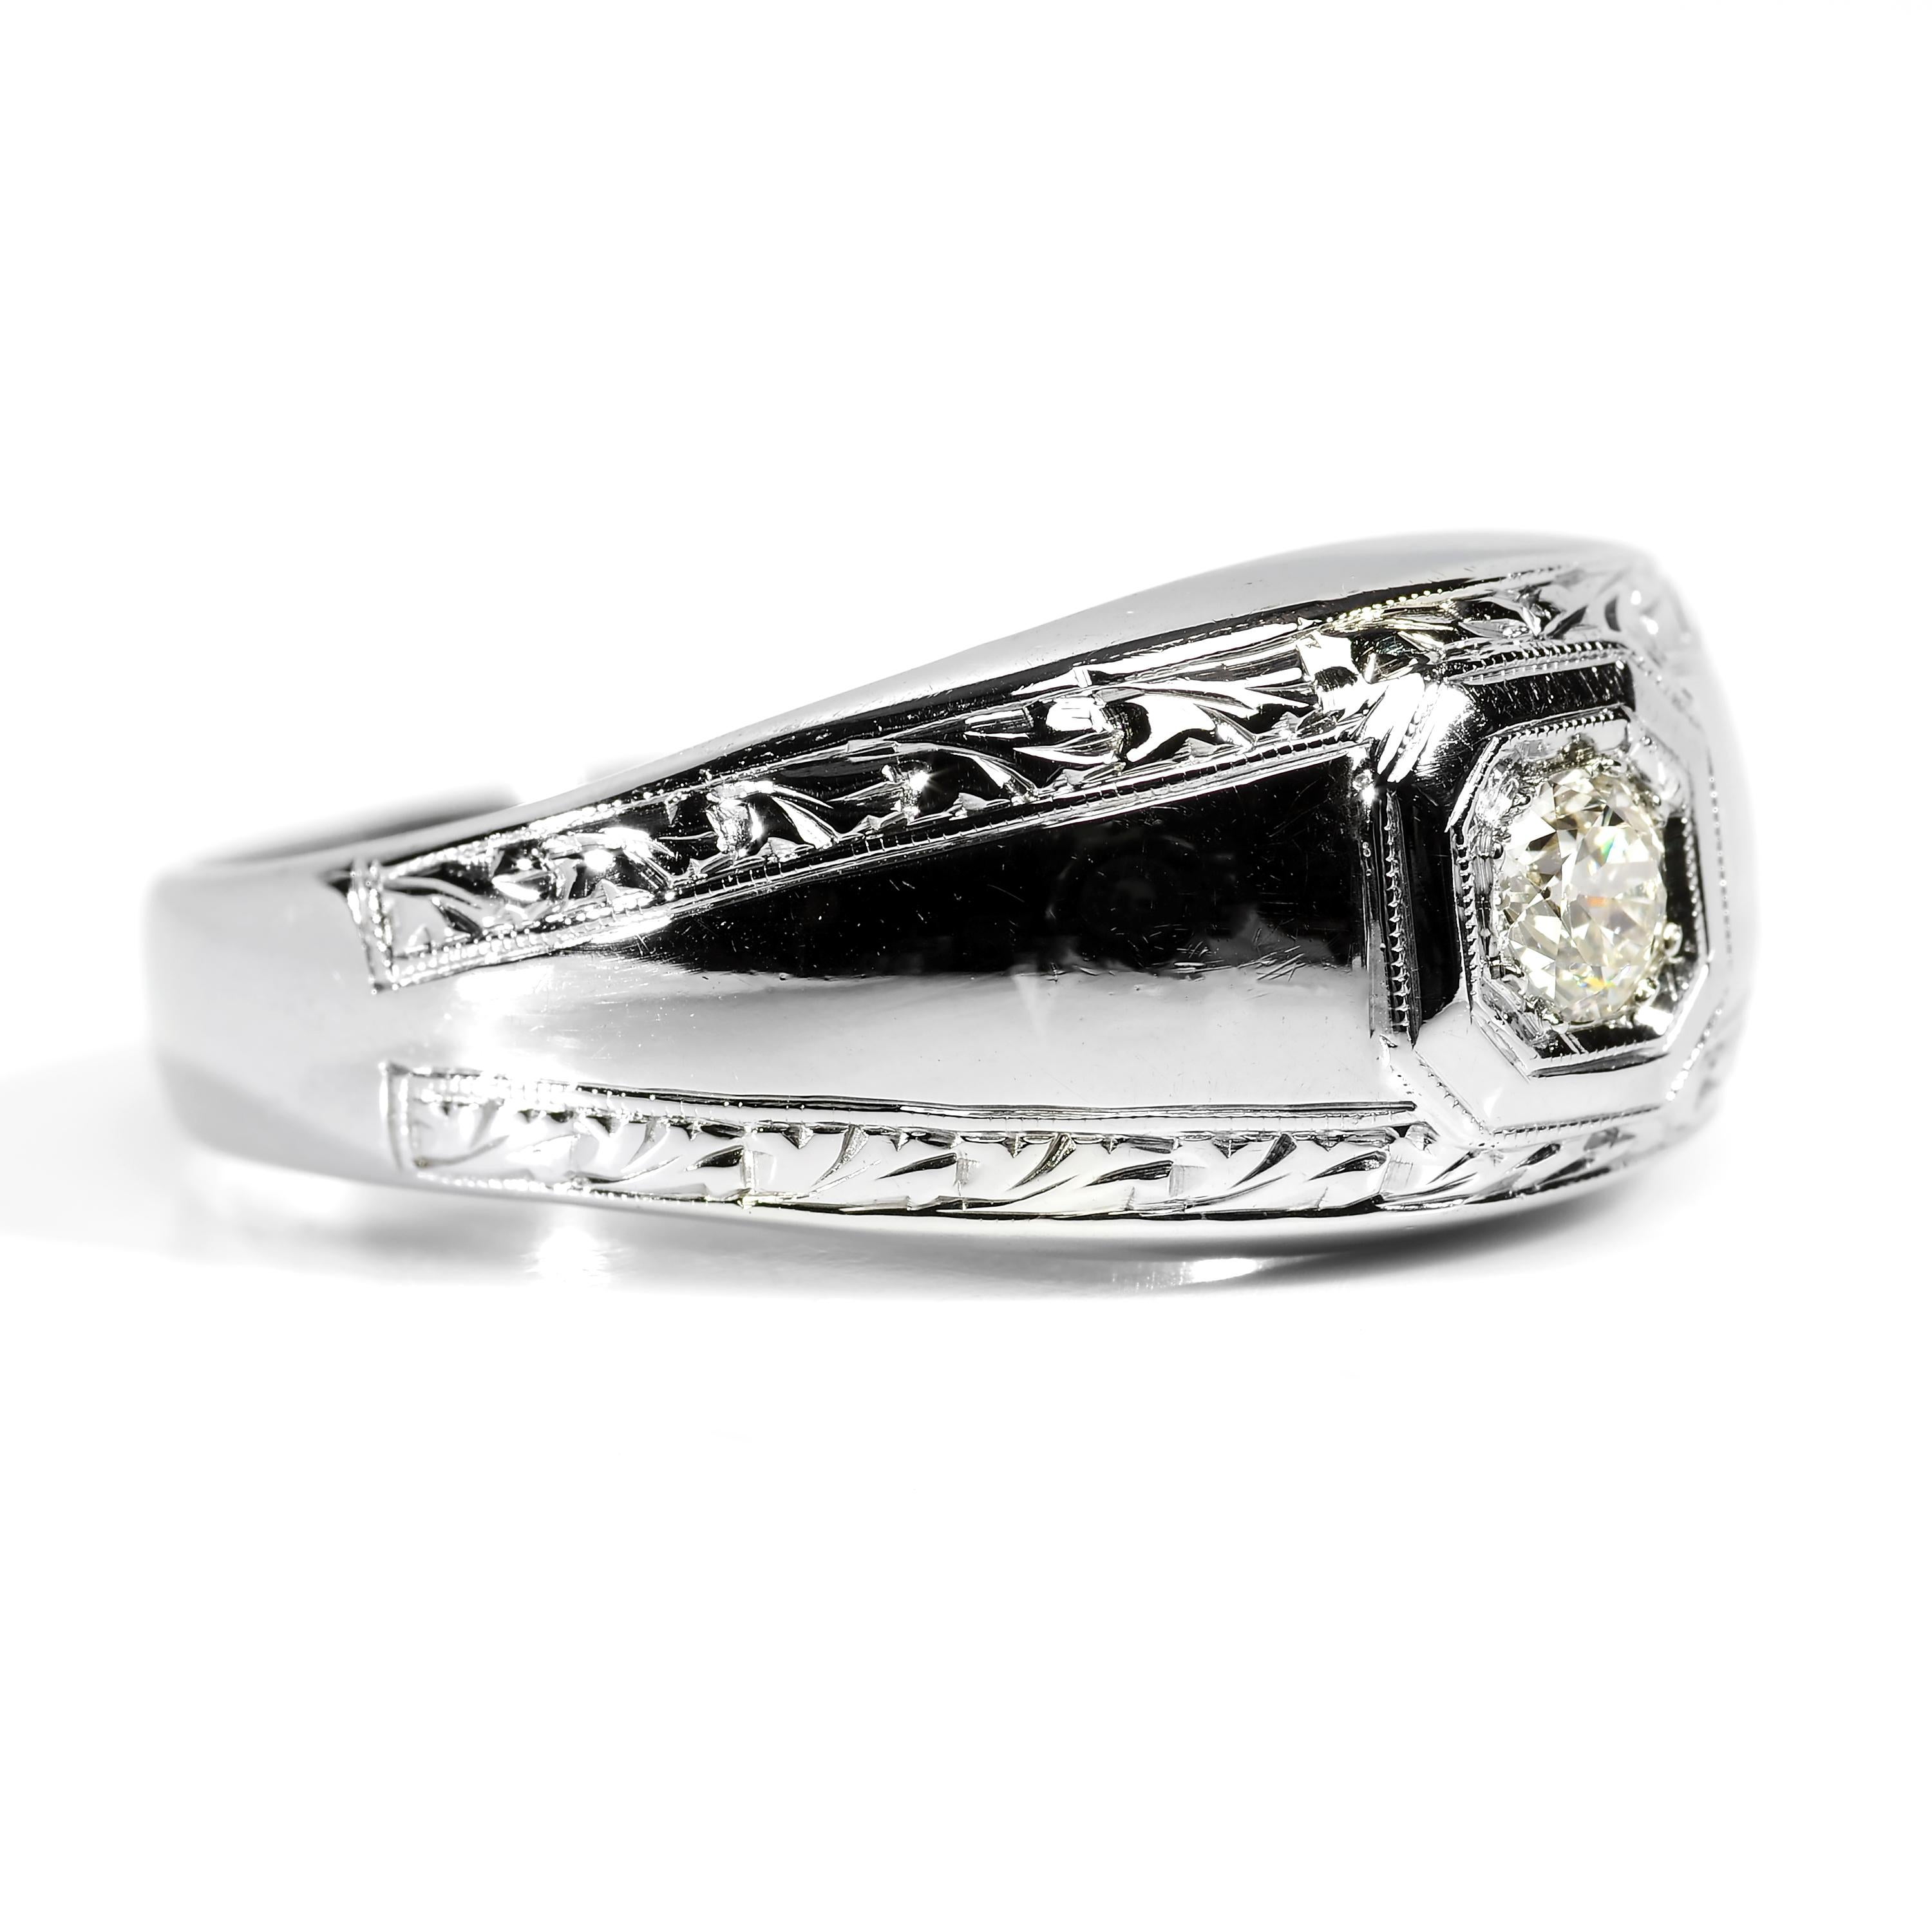 Old European Cut Men's Diamond Ring Understated Art Deco Elegance